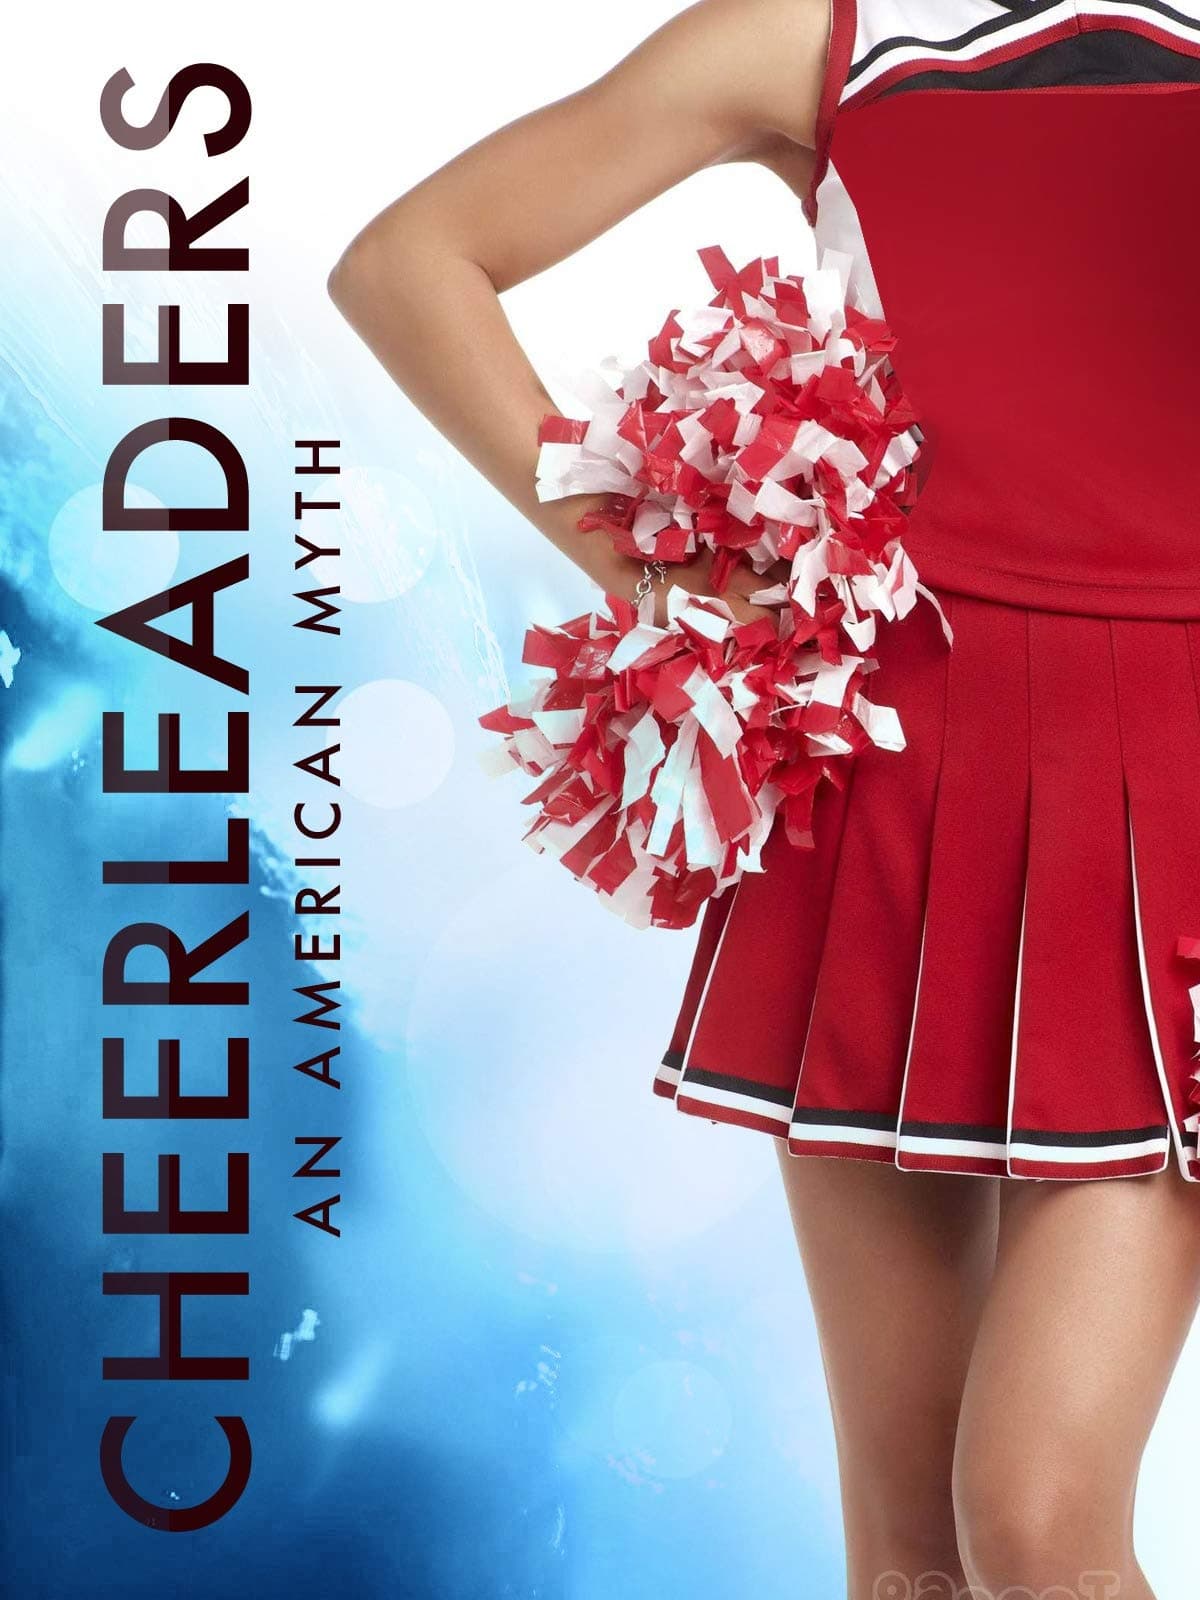 Cheerleaders - an American Myth